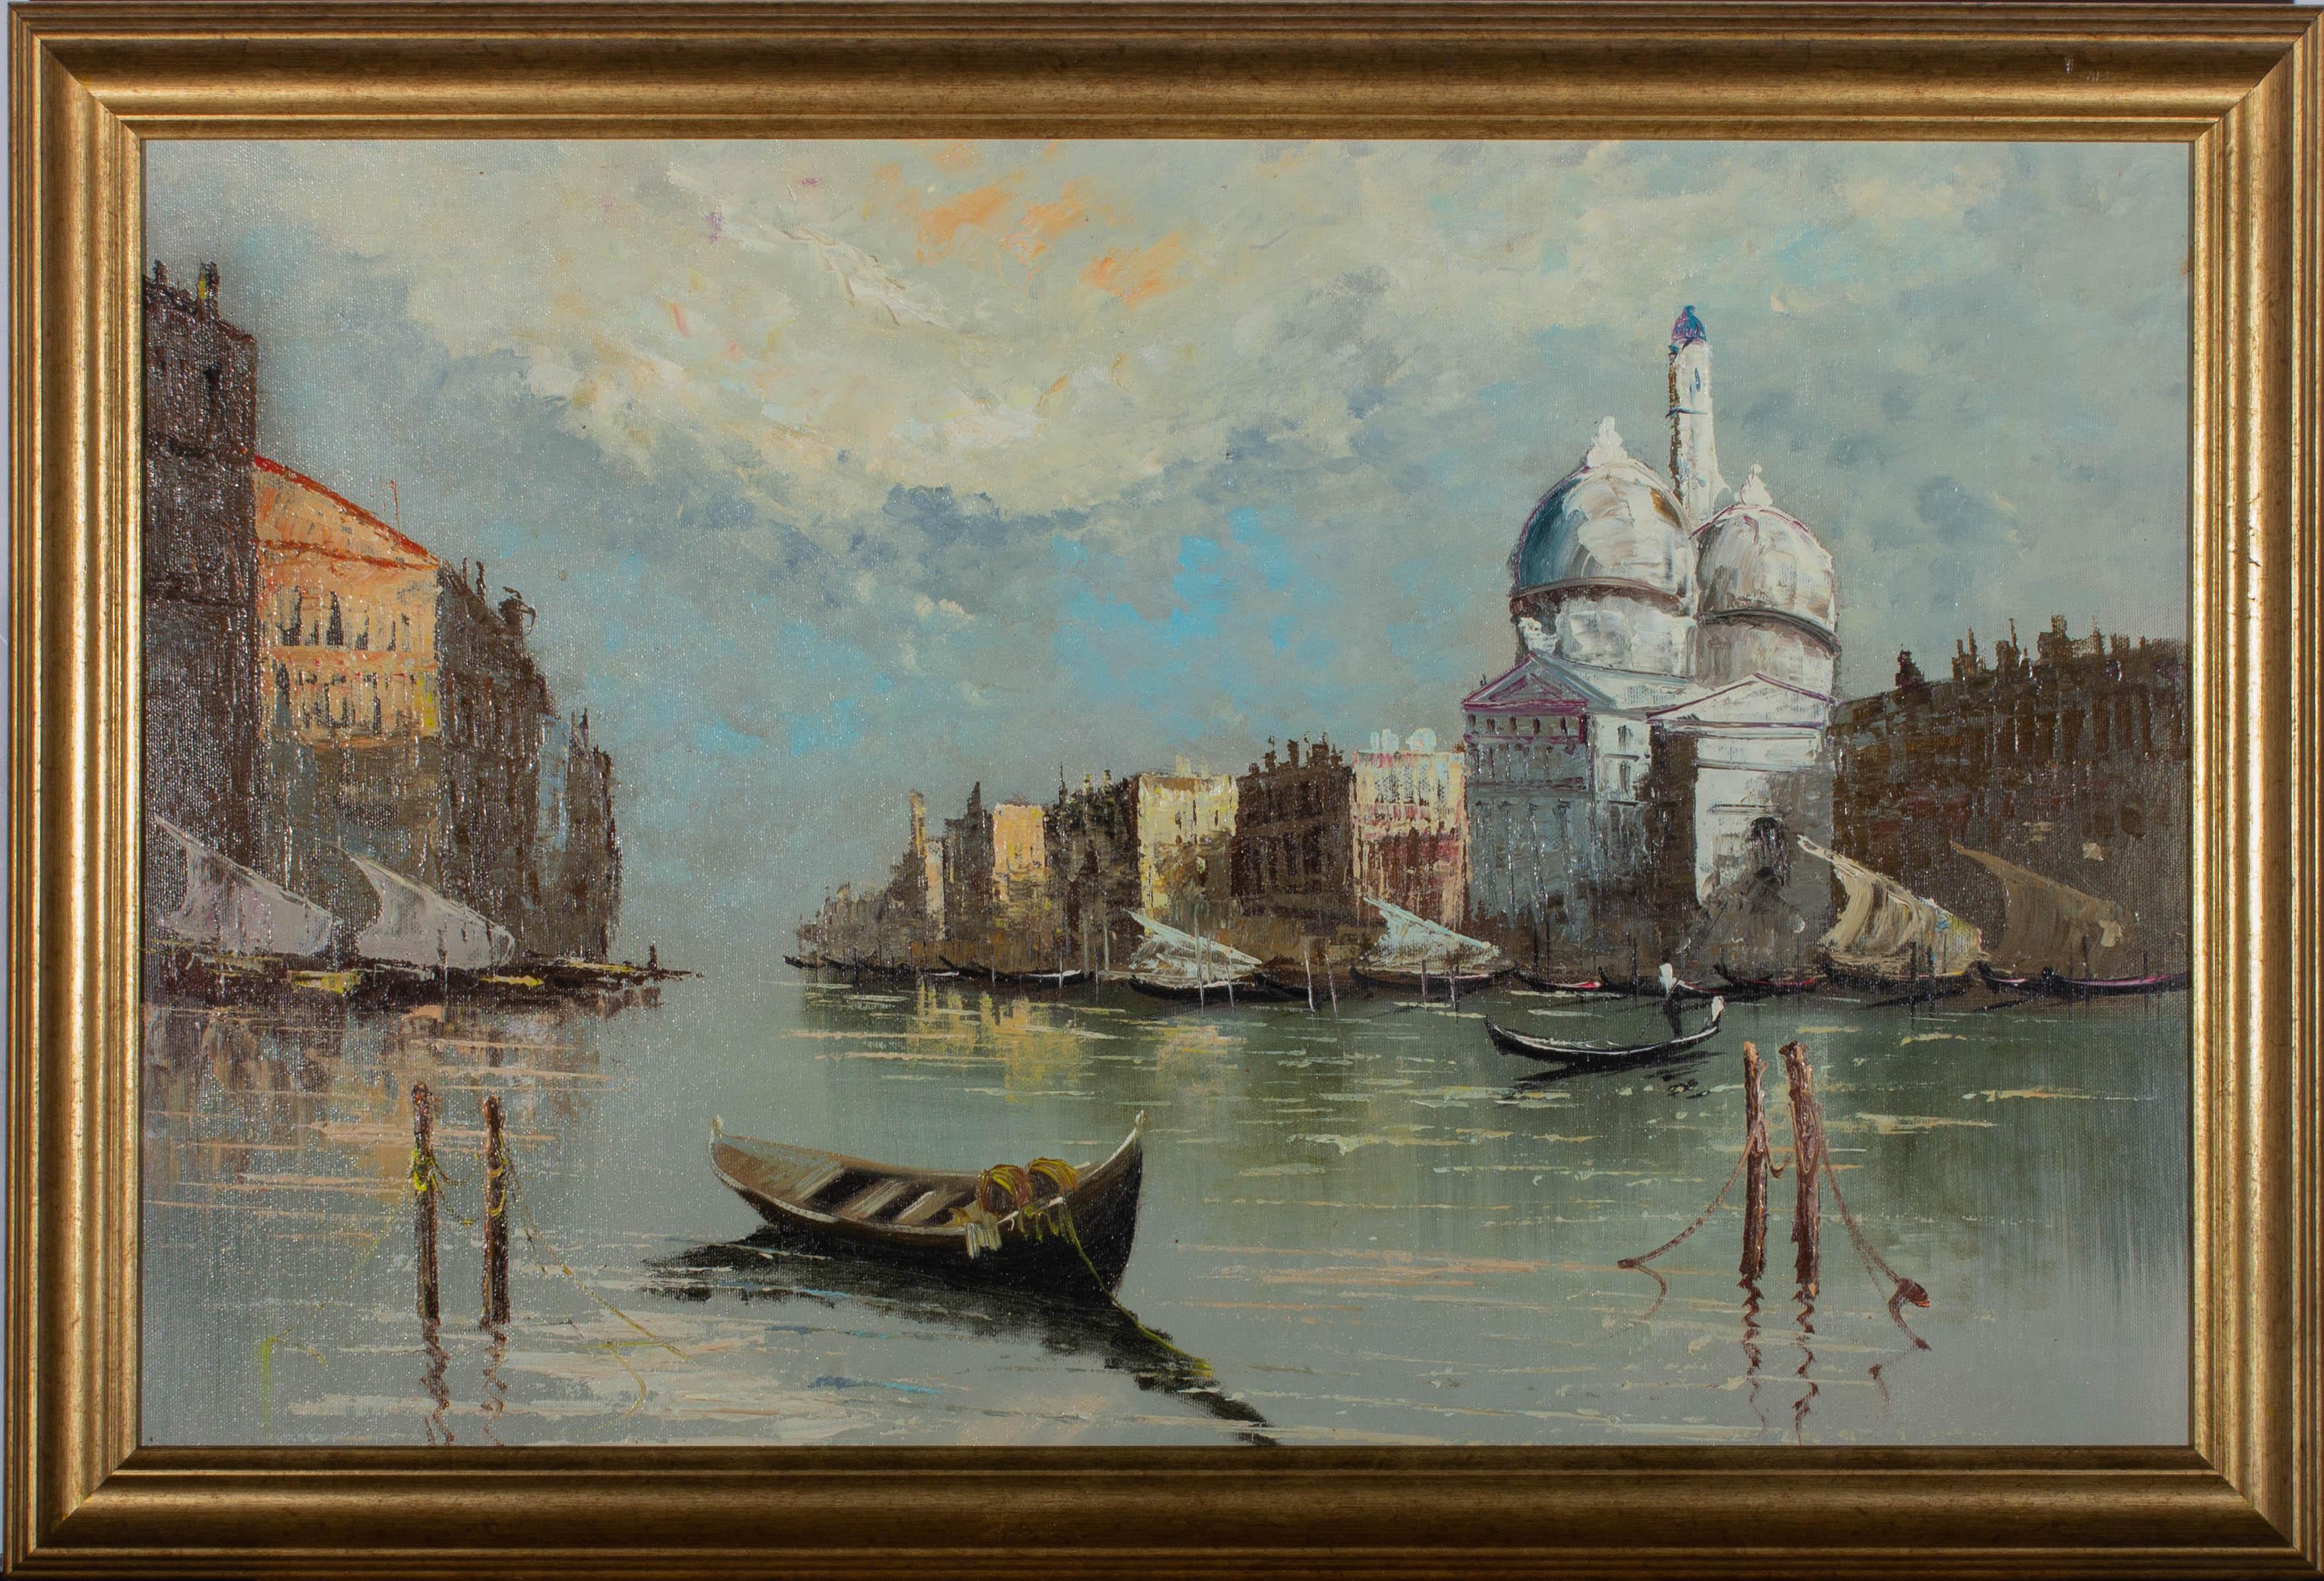 Unknown Landscape Painting - Contemporary Oil - A Scene in Venice with Gondolas